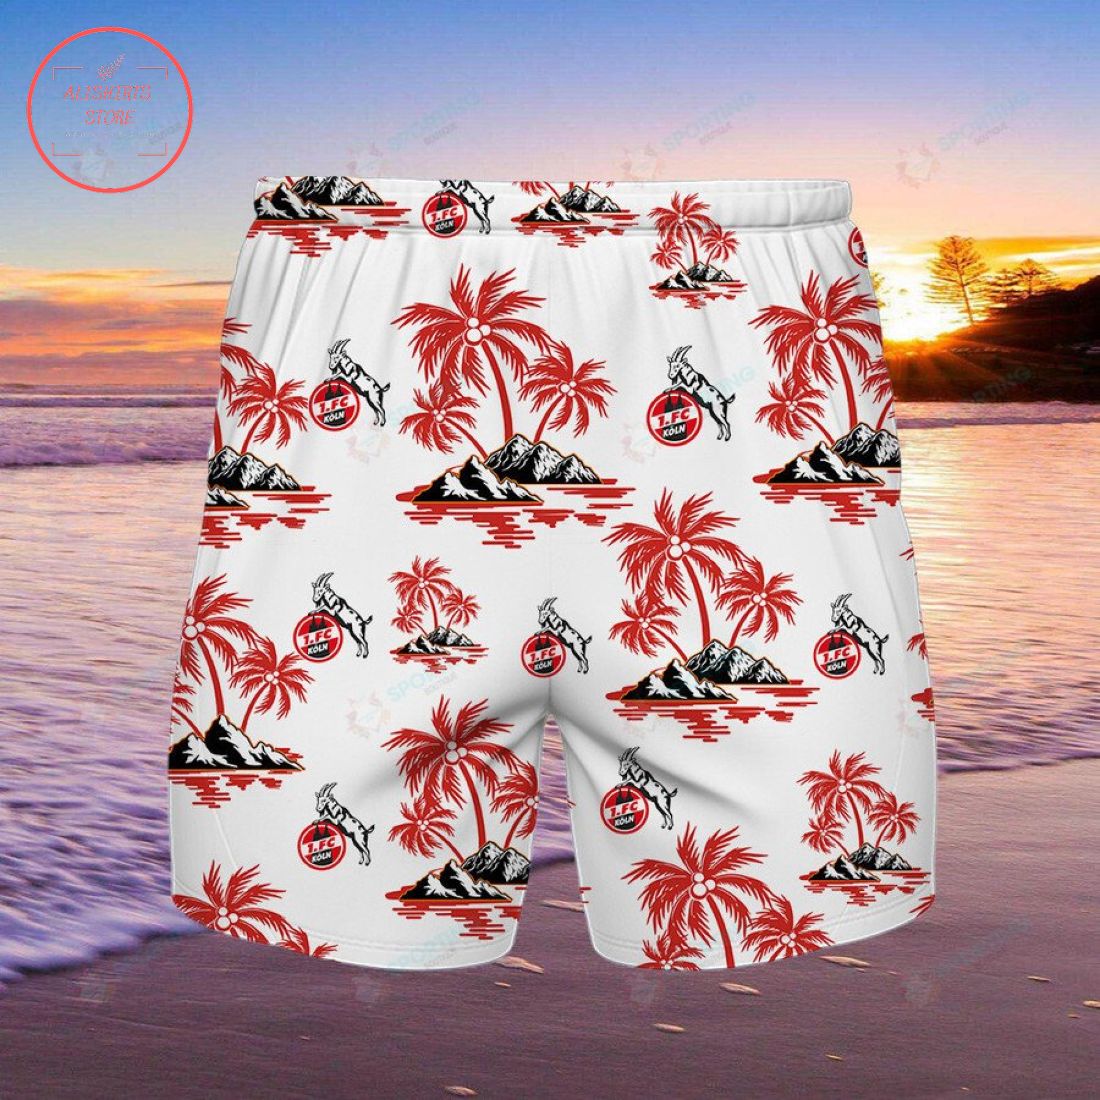 FC Koln Hawaiian Shirt and Shorts